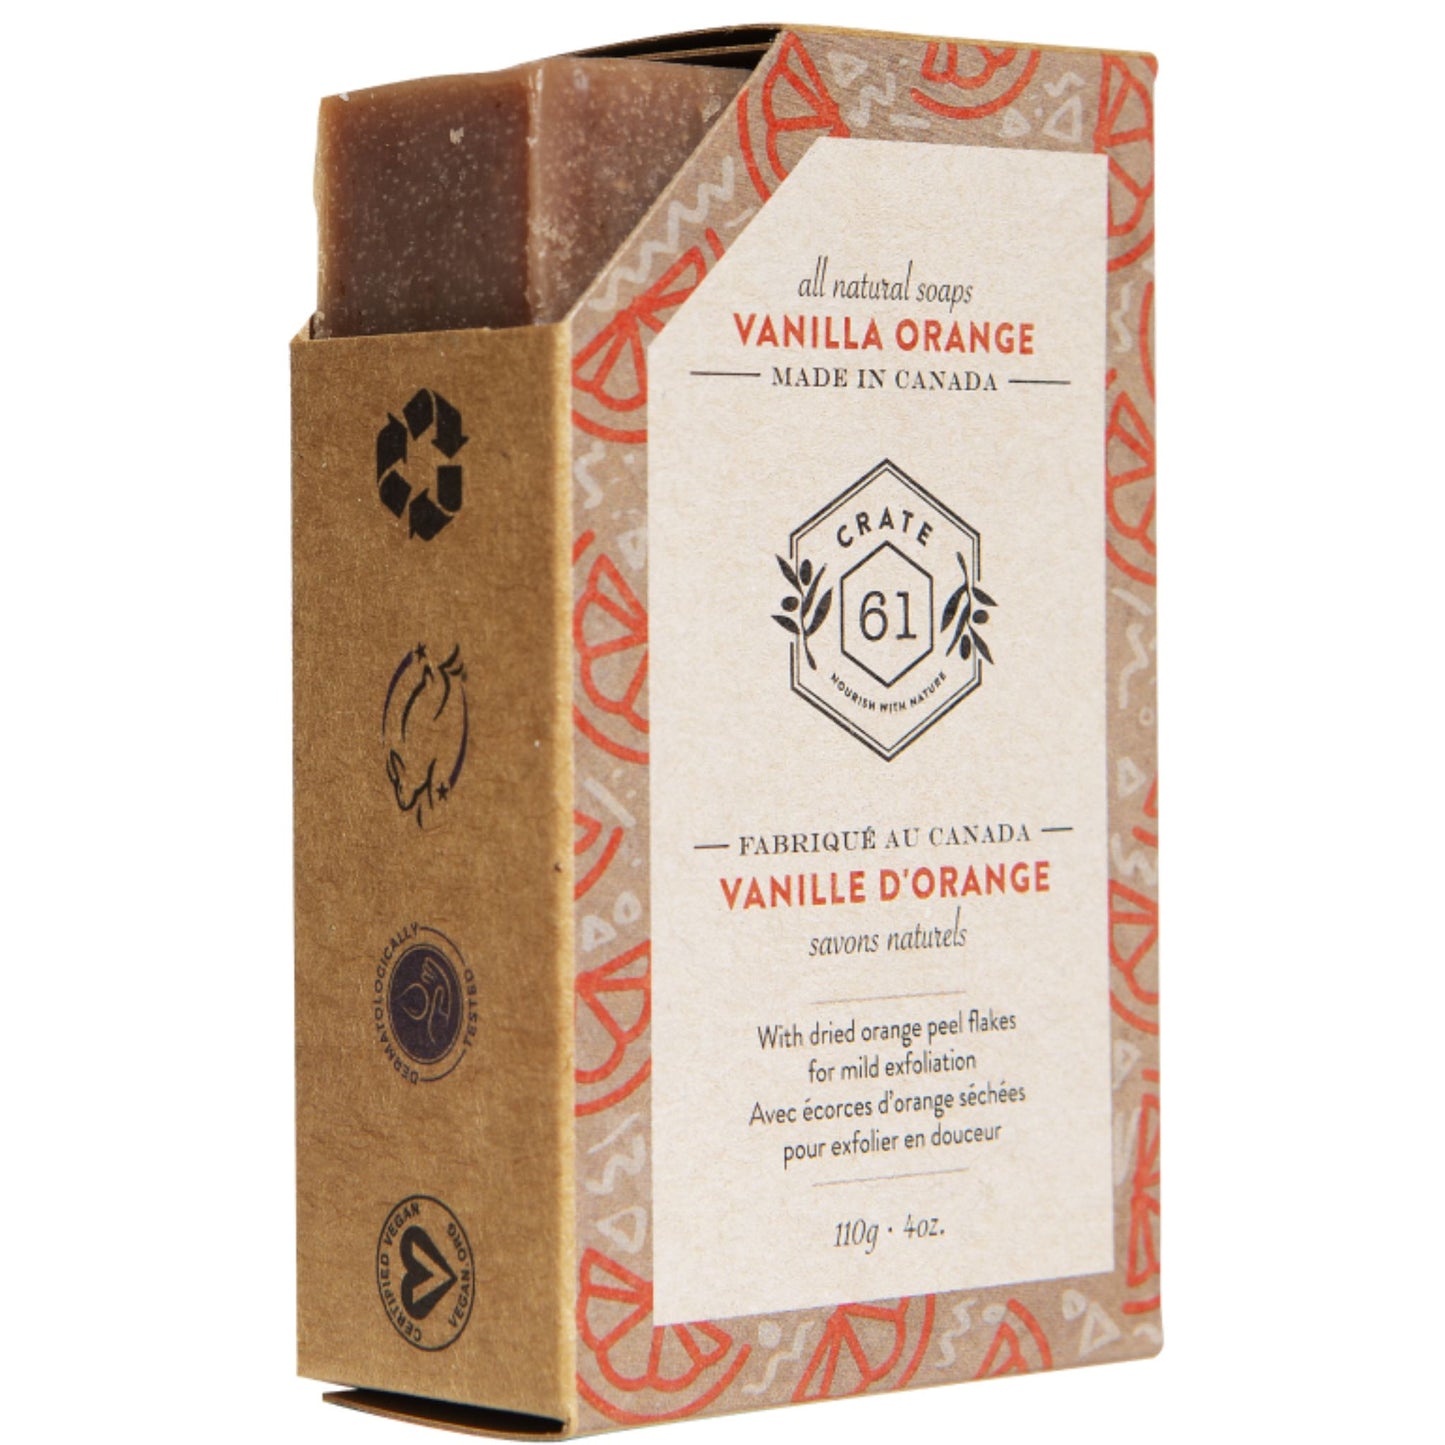 crate-61-soap-vanilla-orange-110g_1